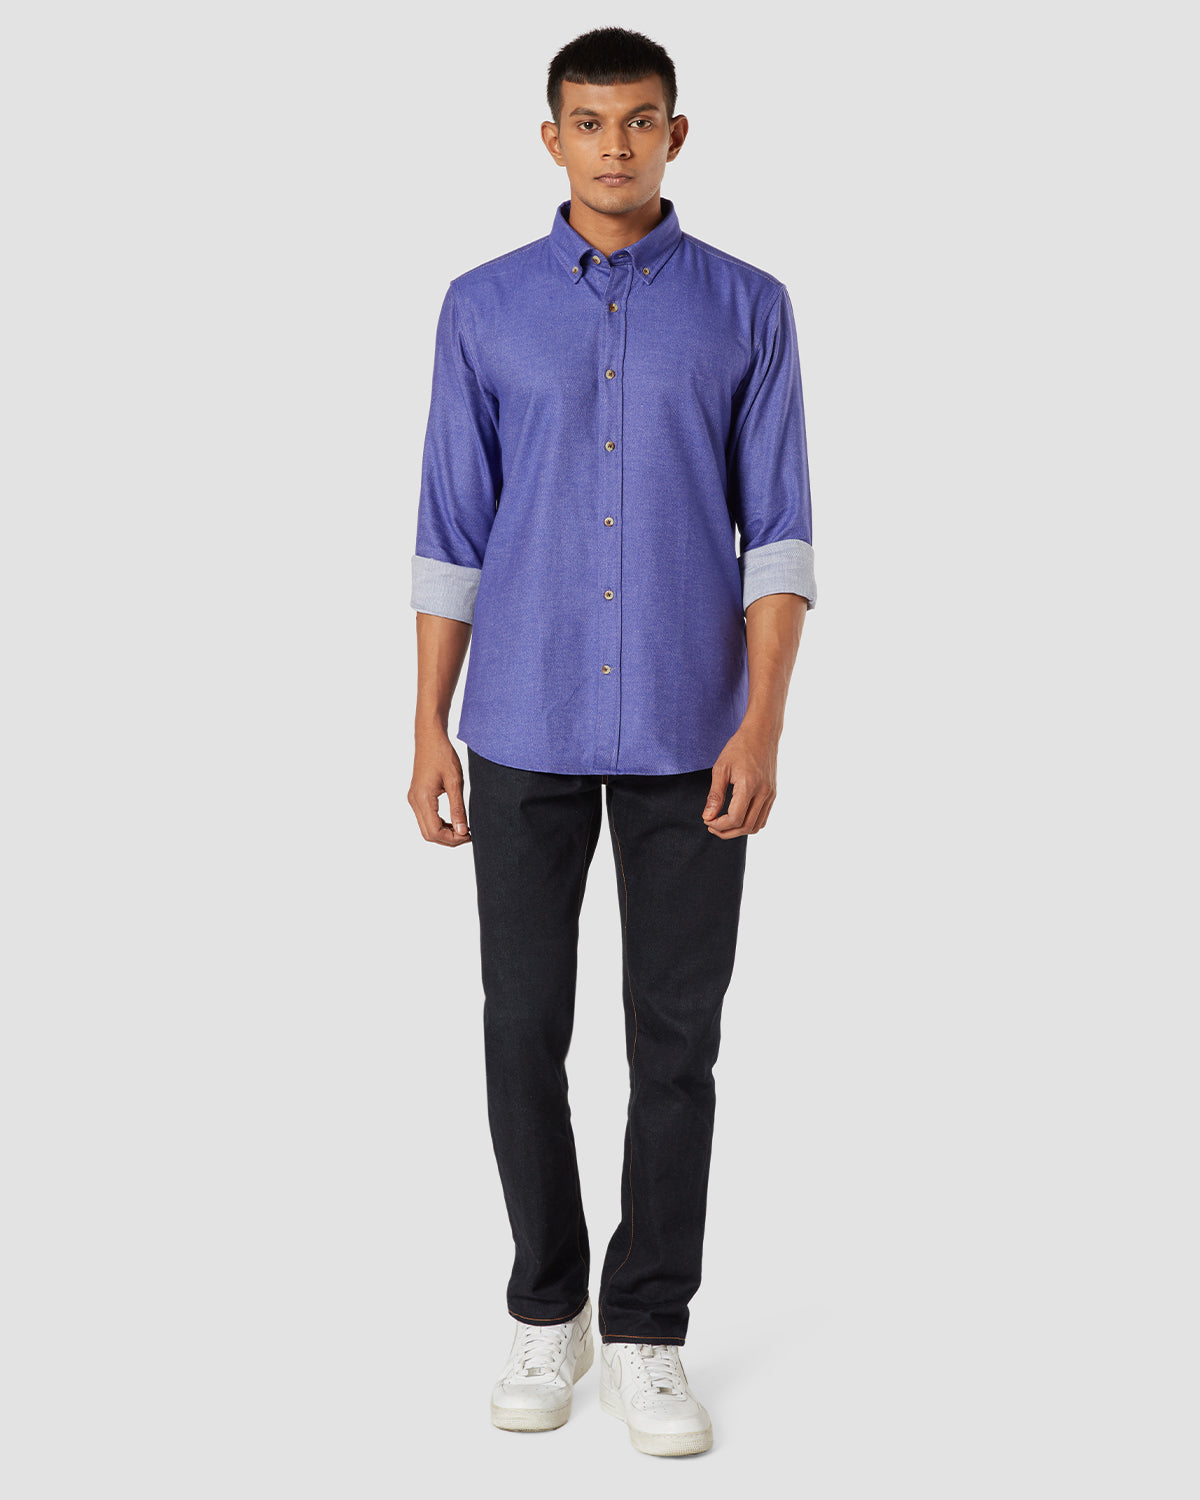 Bombay Shirt Company - Japanese Smoky Grape Flannel Shirt